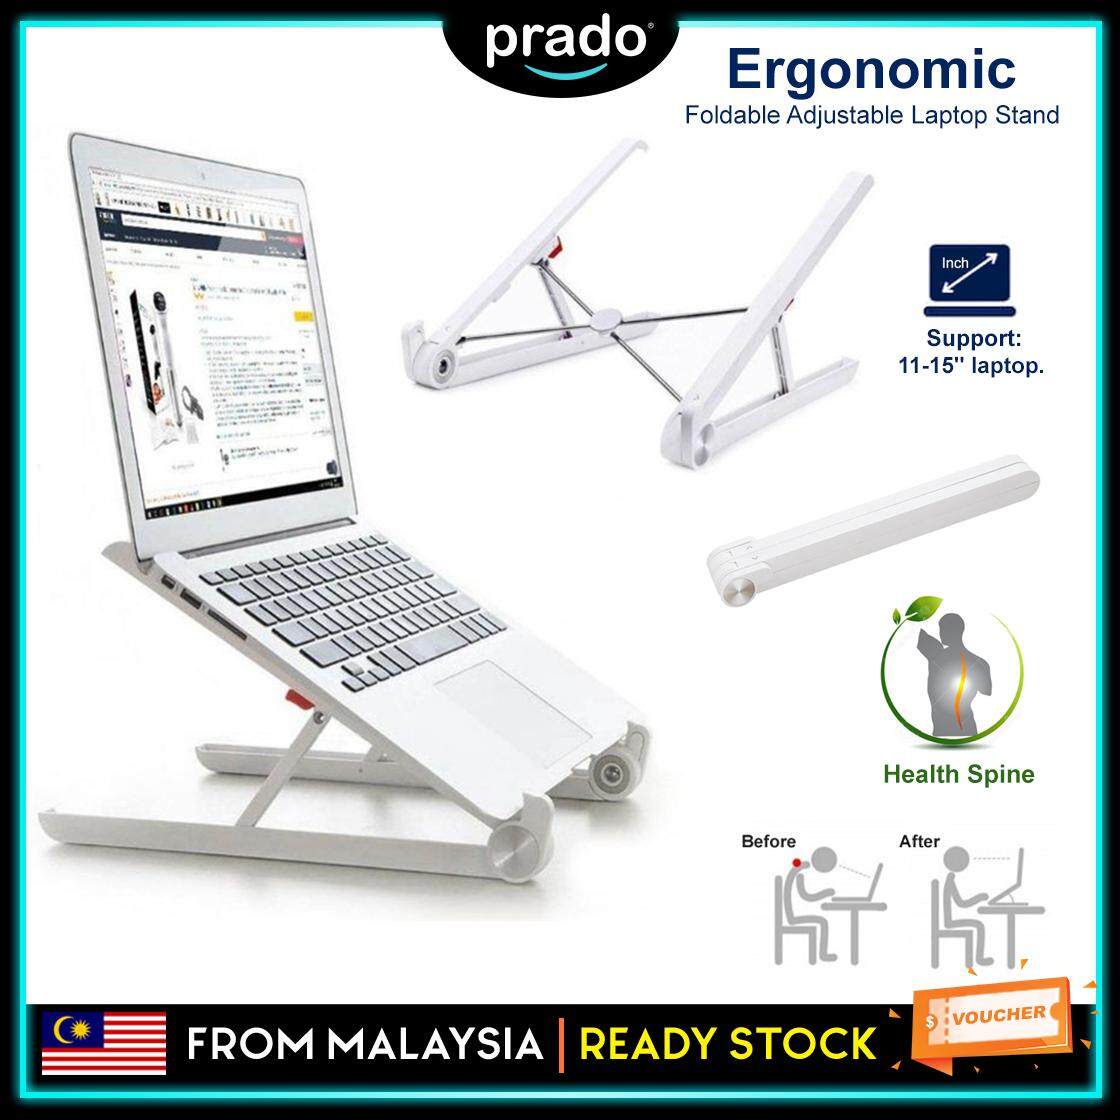 PRADO Malaysia Portable Travel Laptop Stands Foldable Desktop Notebook Holder Mount Adjustable Eye-Level Ergonomic Design Portable Laptop Riser for MacBook, Notebook Computer PC iPad Tablet 11 inch to 15 inch